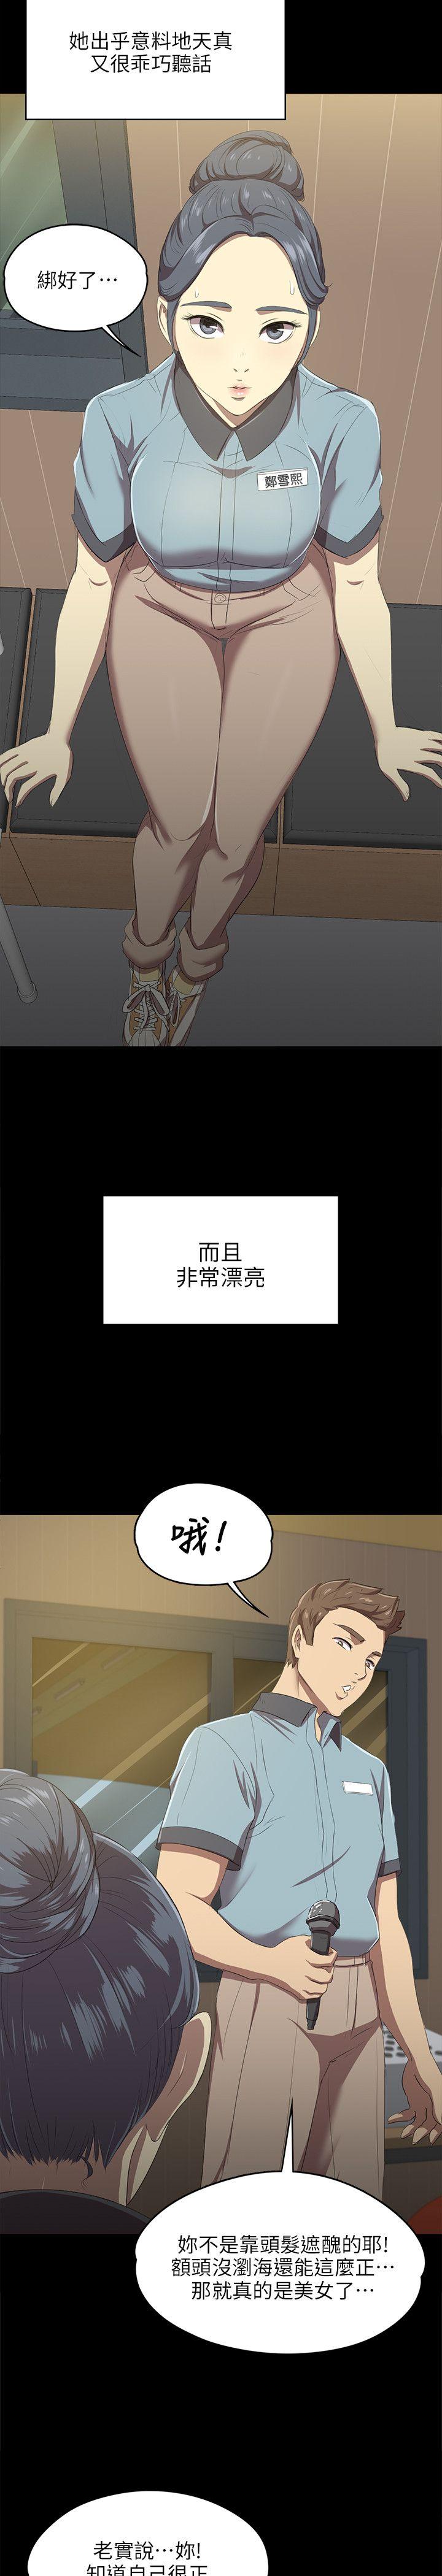 [J&B&活火山]KTV情人 EP.1(正體中文)高畫質版本 20